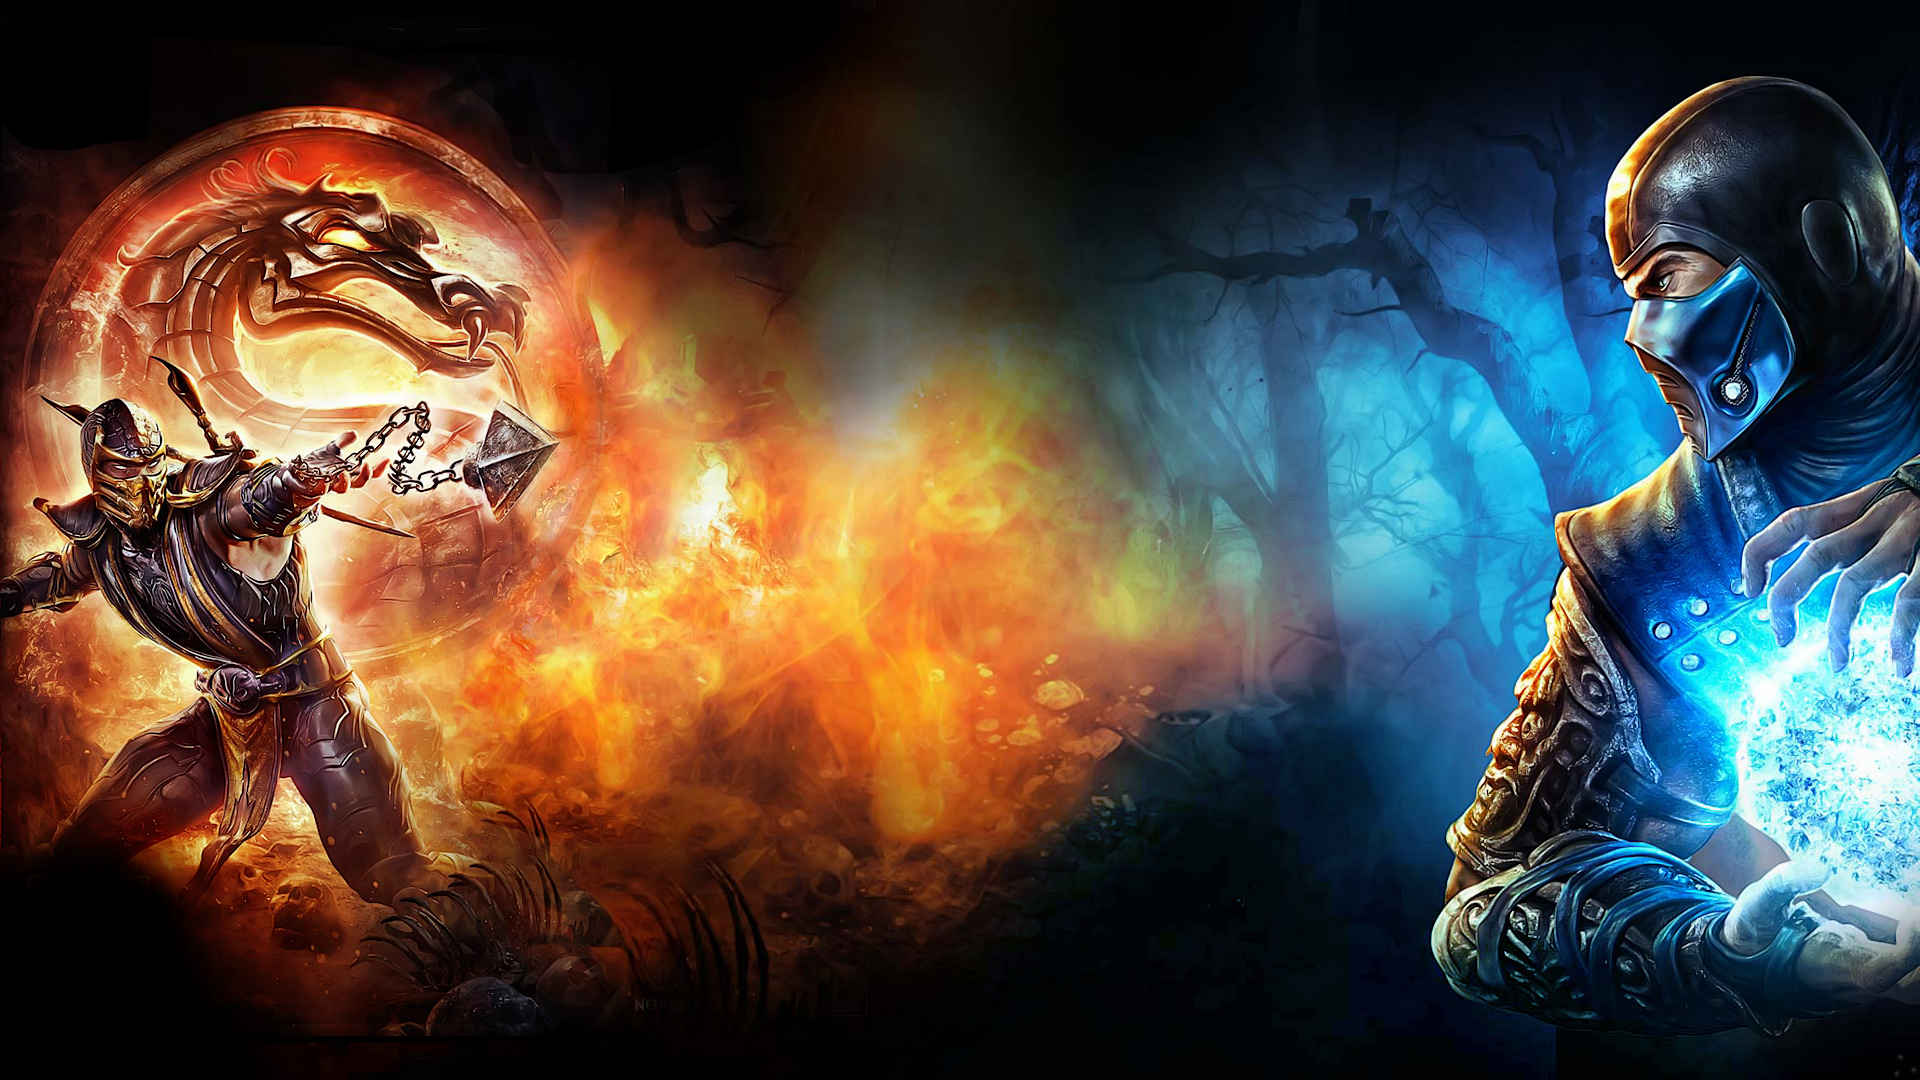 Mortal Kombat Sub-Zero and Scorpion and the Dragon